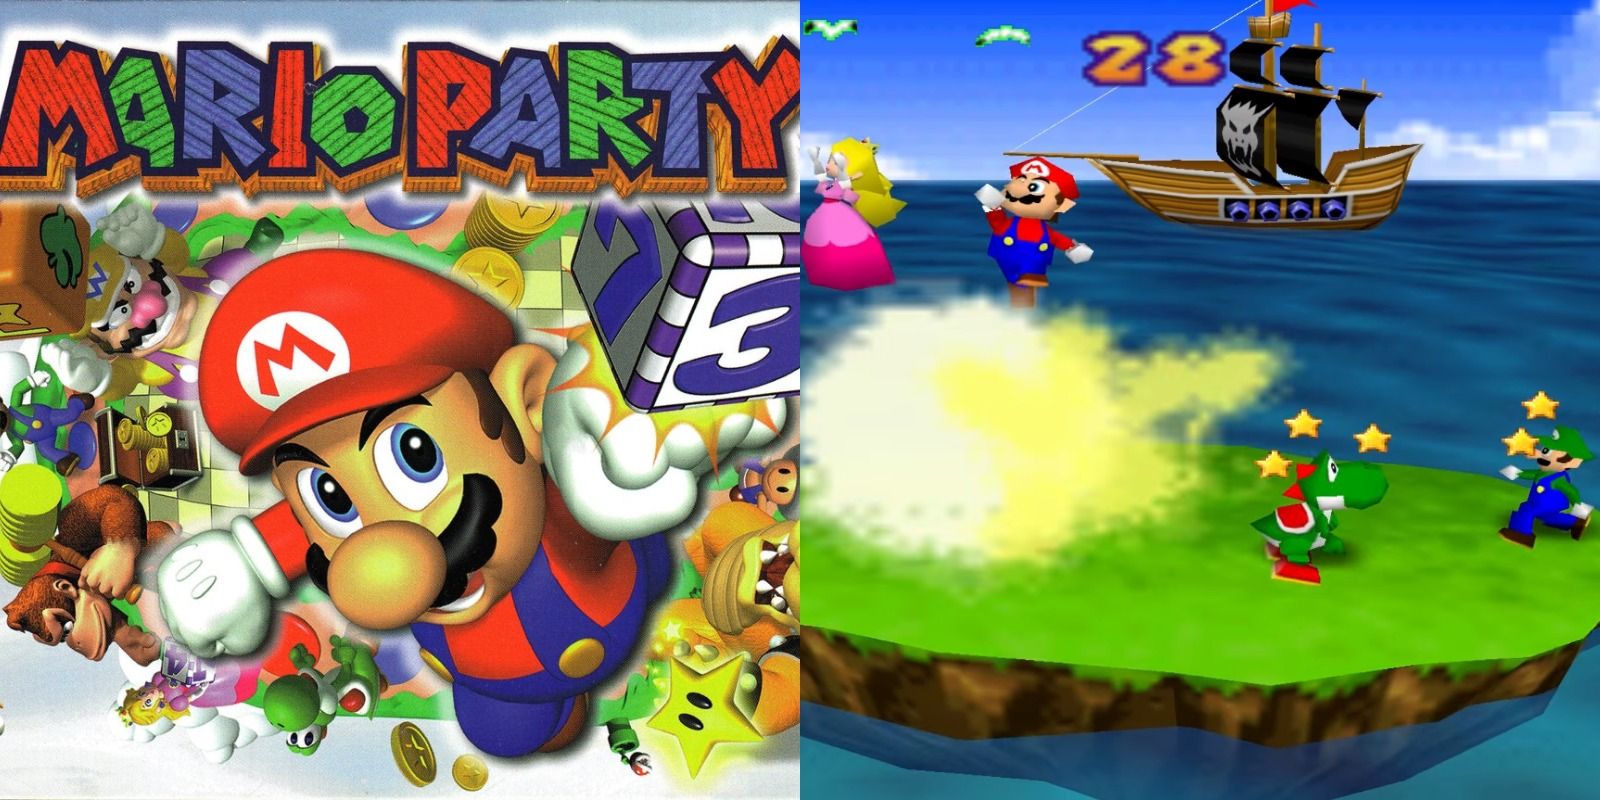 Original Mario Party for the Nintendo 64